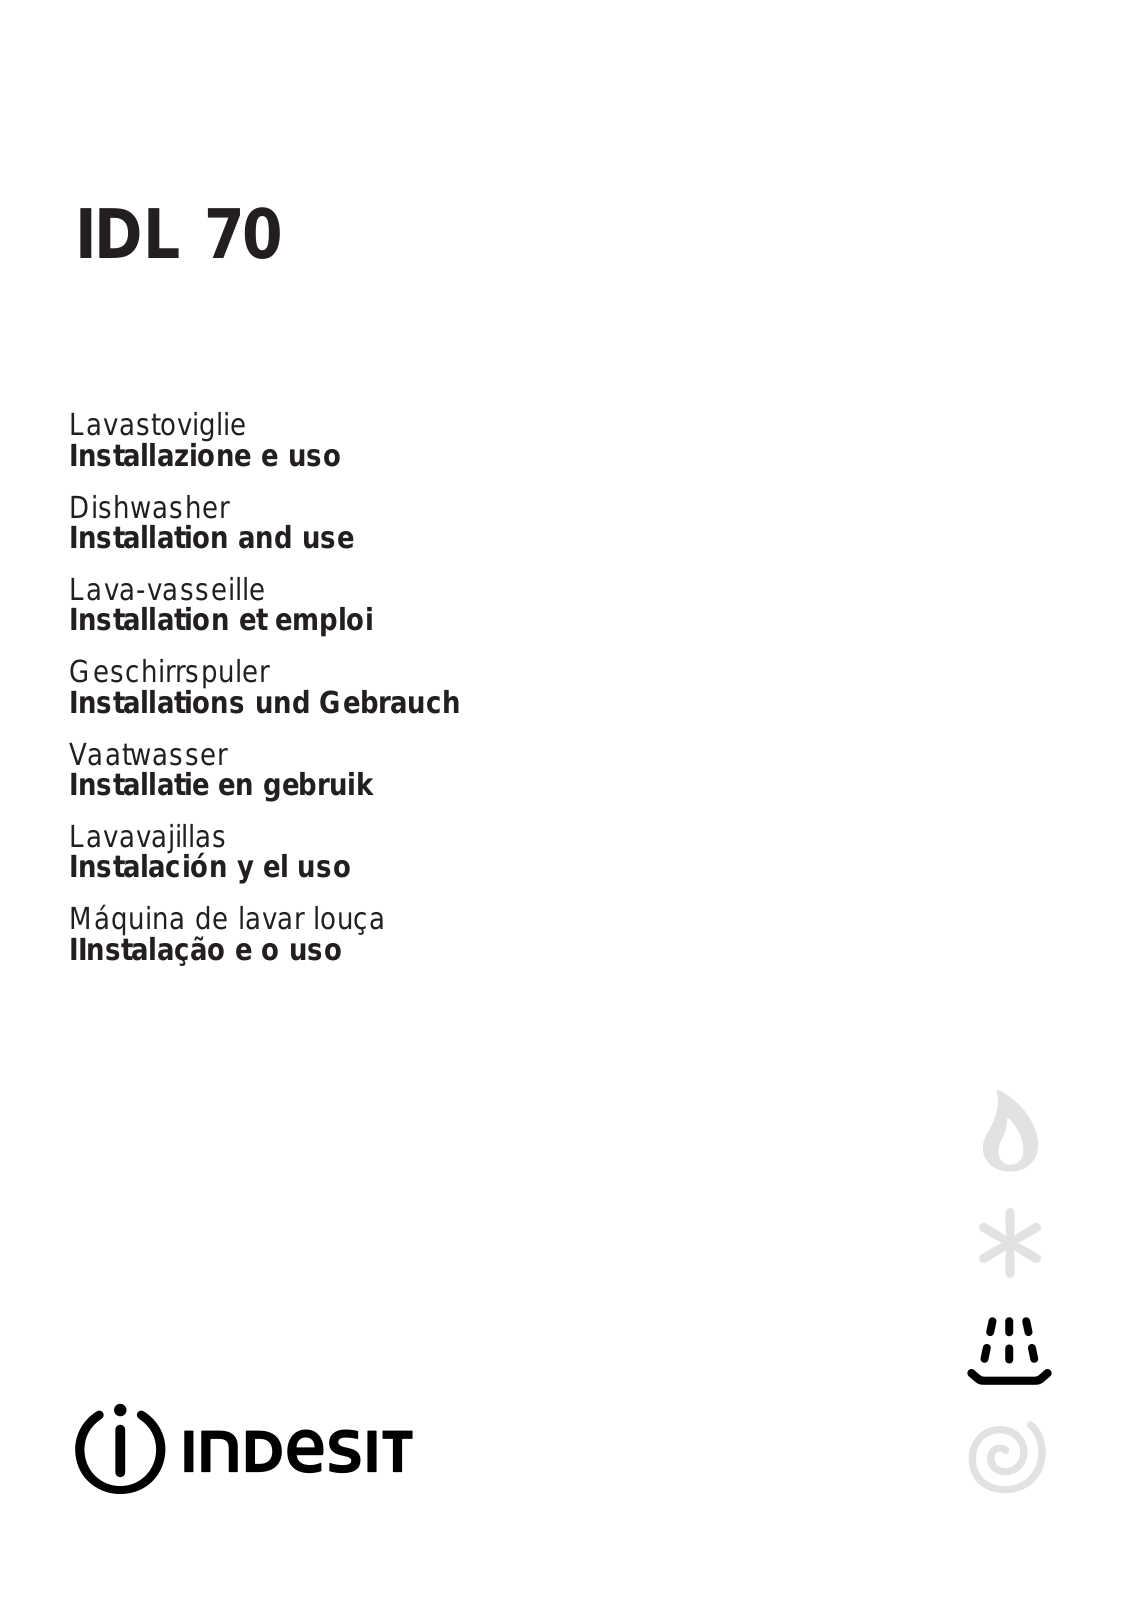 INDESIT IDL 70 User Manual